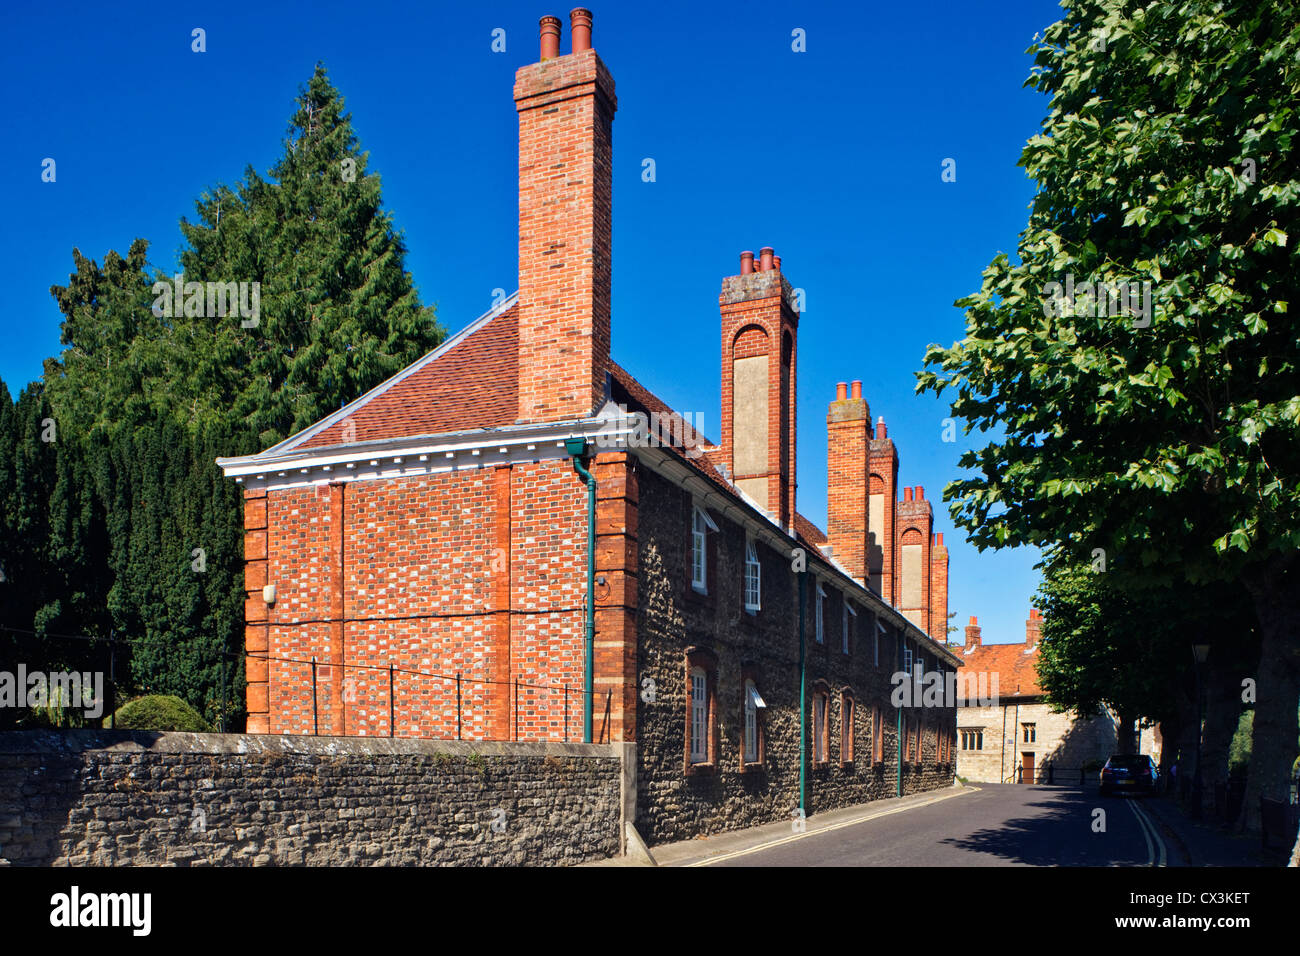 Brick Alley Almshouses, Abingdon-on-Thames, Oxfordshire, UK Stock Photo